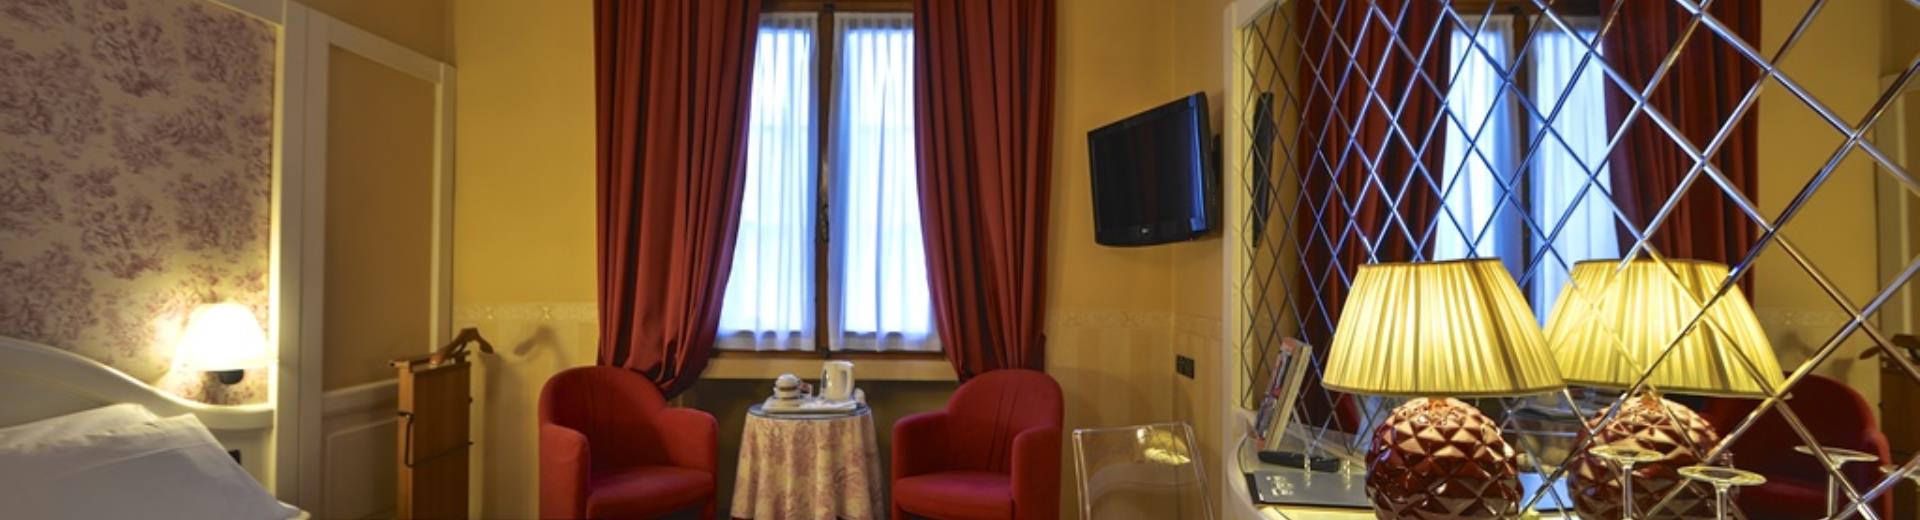 Best Western Hotel Genio Torino - Camera Matrimoniale